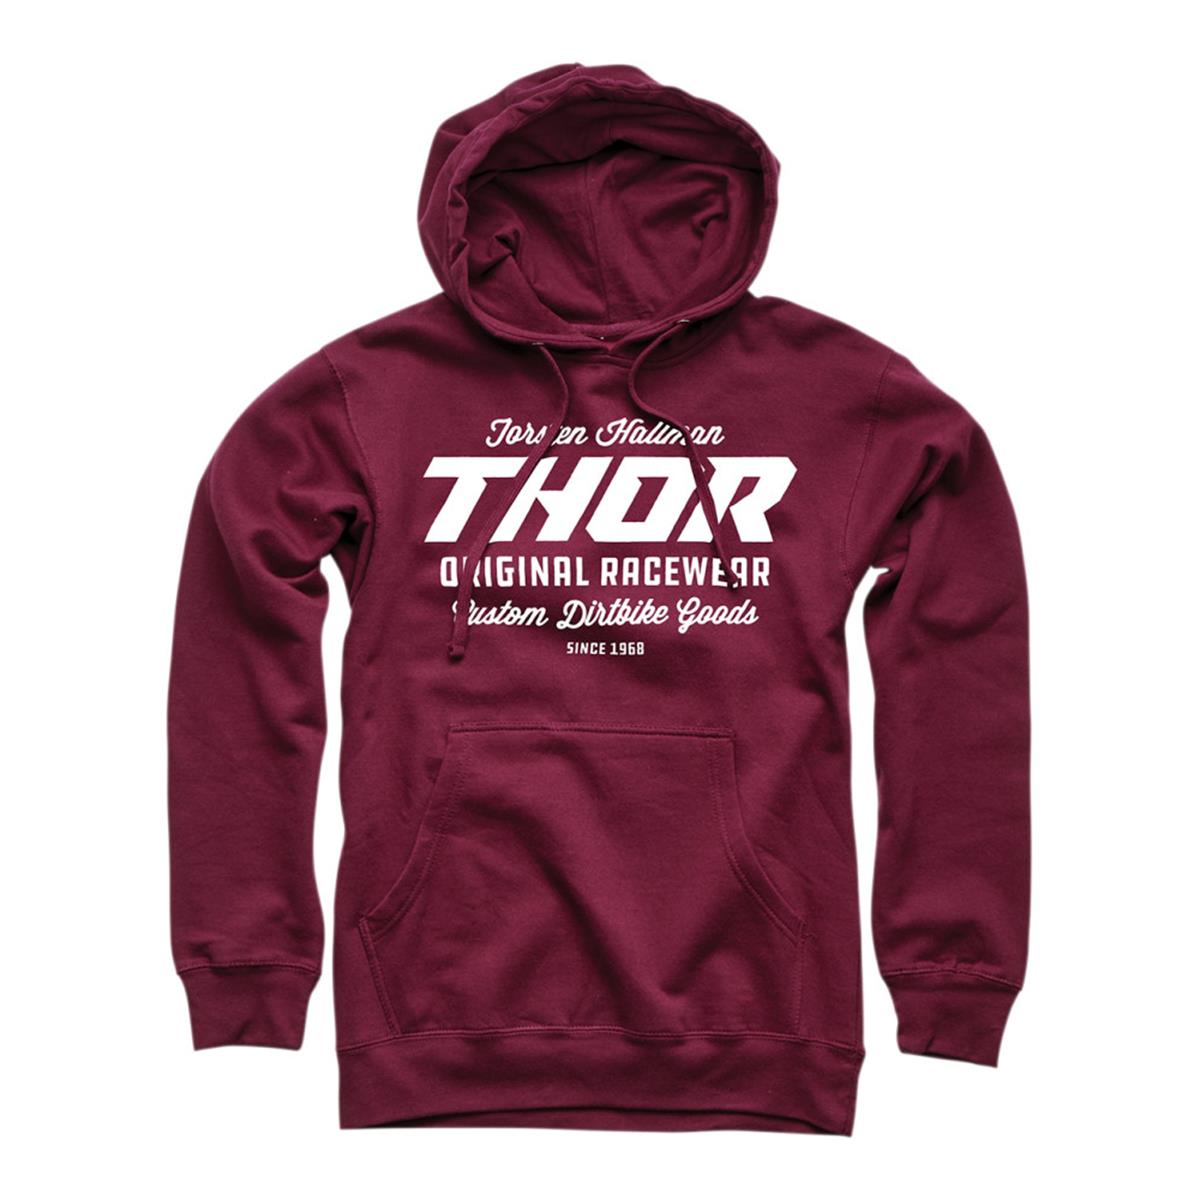 Thor Hoody The Goods Maroon